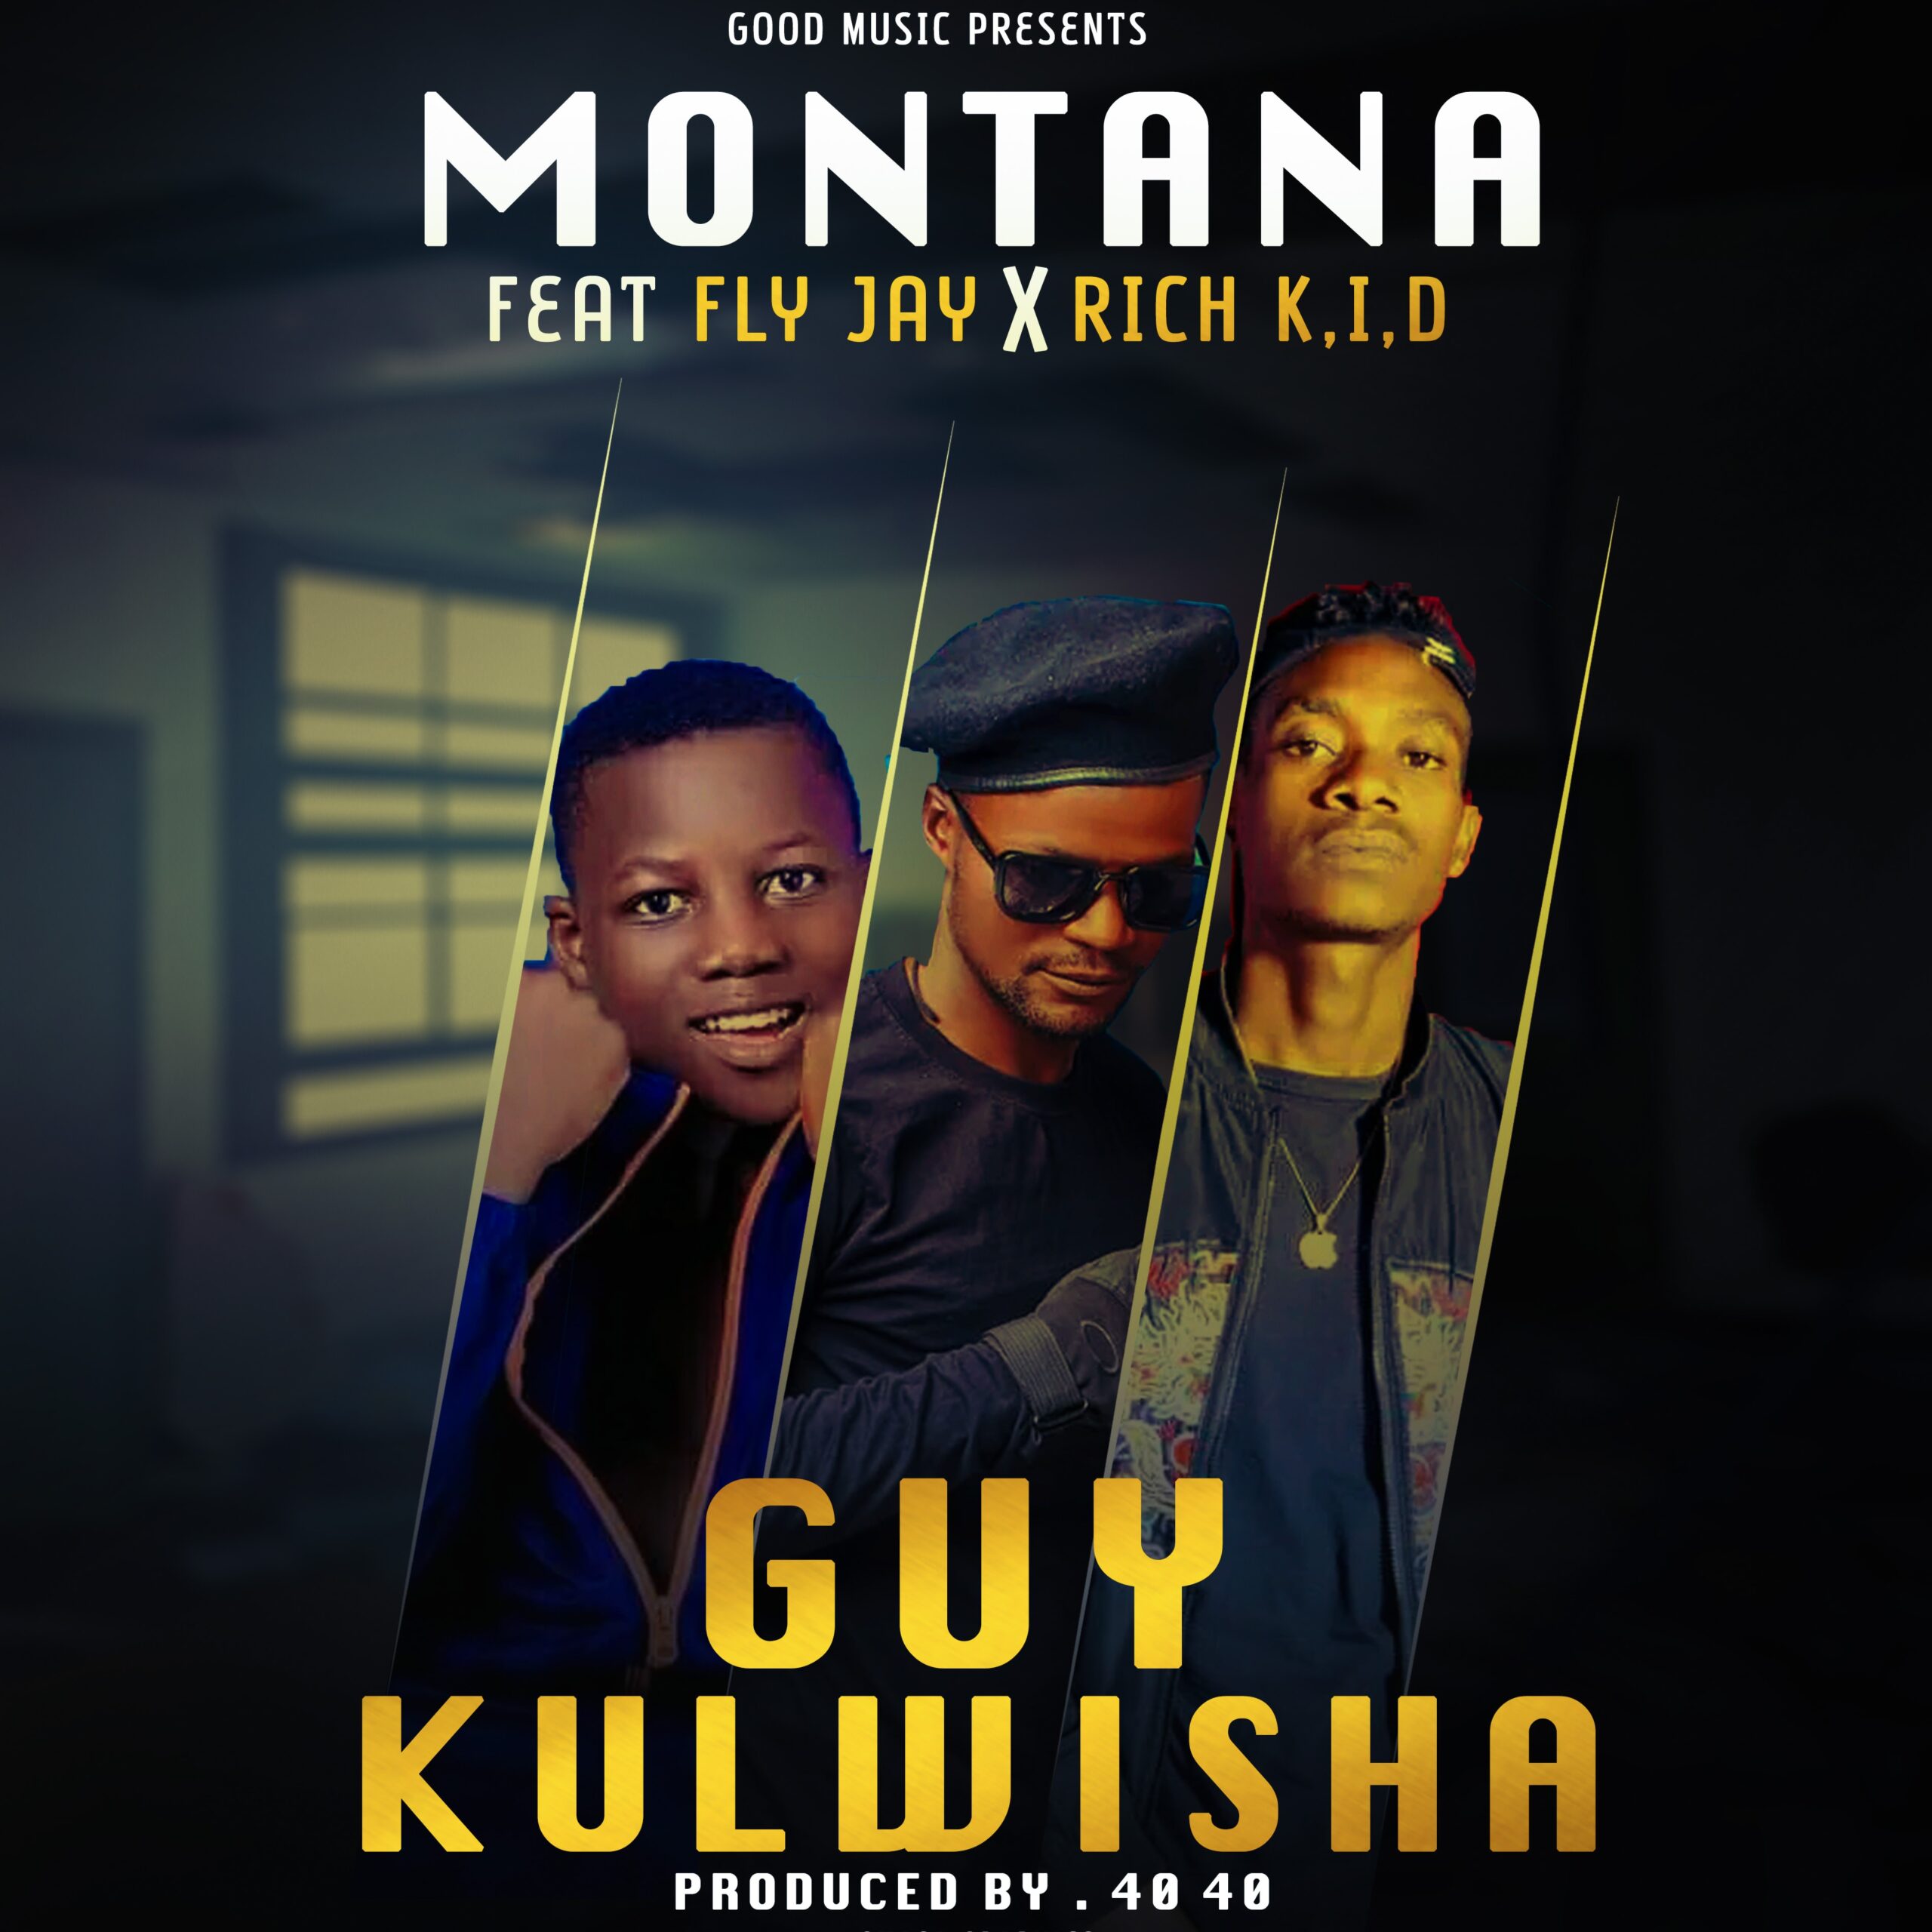 Montana Ft Fly Jay X Rich K.I.D - Guy Kulwisha (Prod By 4040)